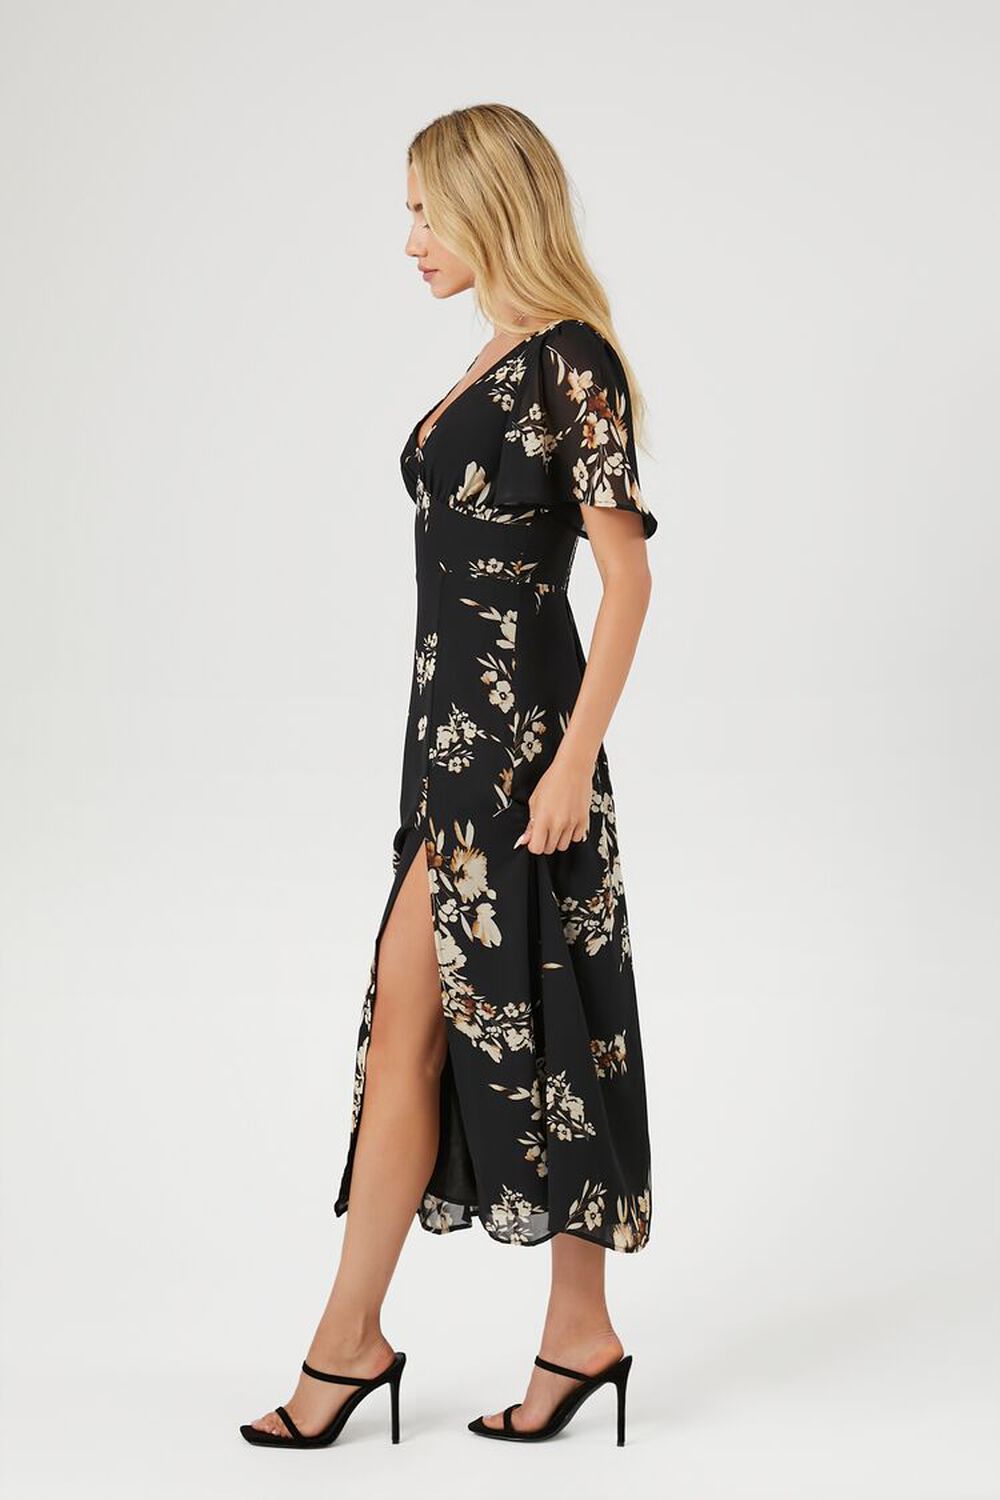 BLACK/MULTI Chiffon Floral Print Maxi Dress, image 2